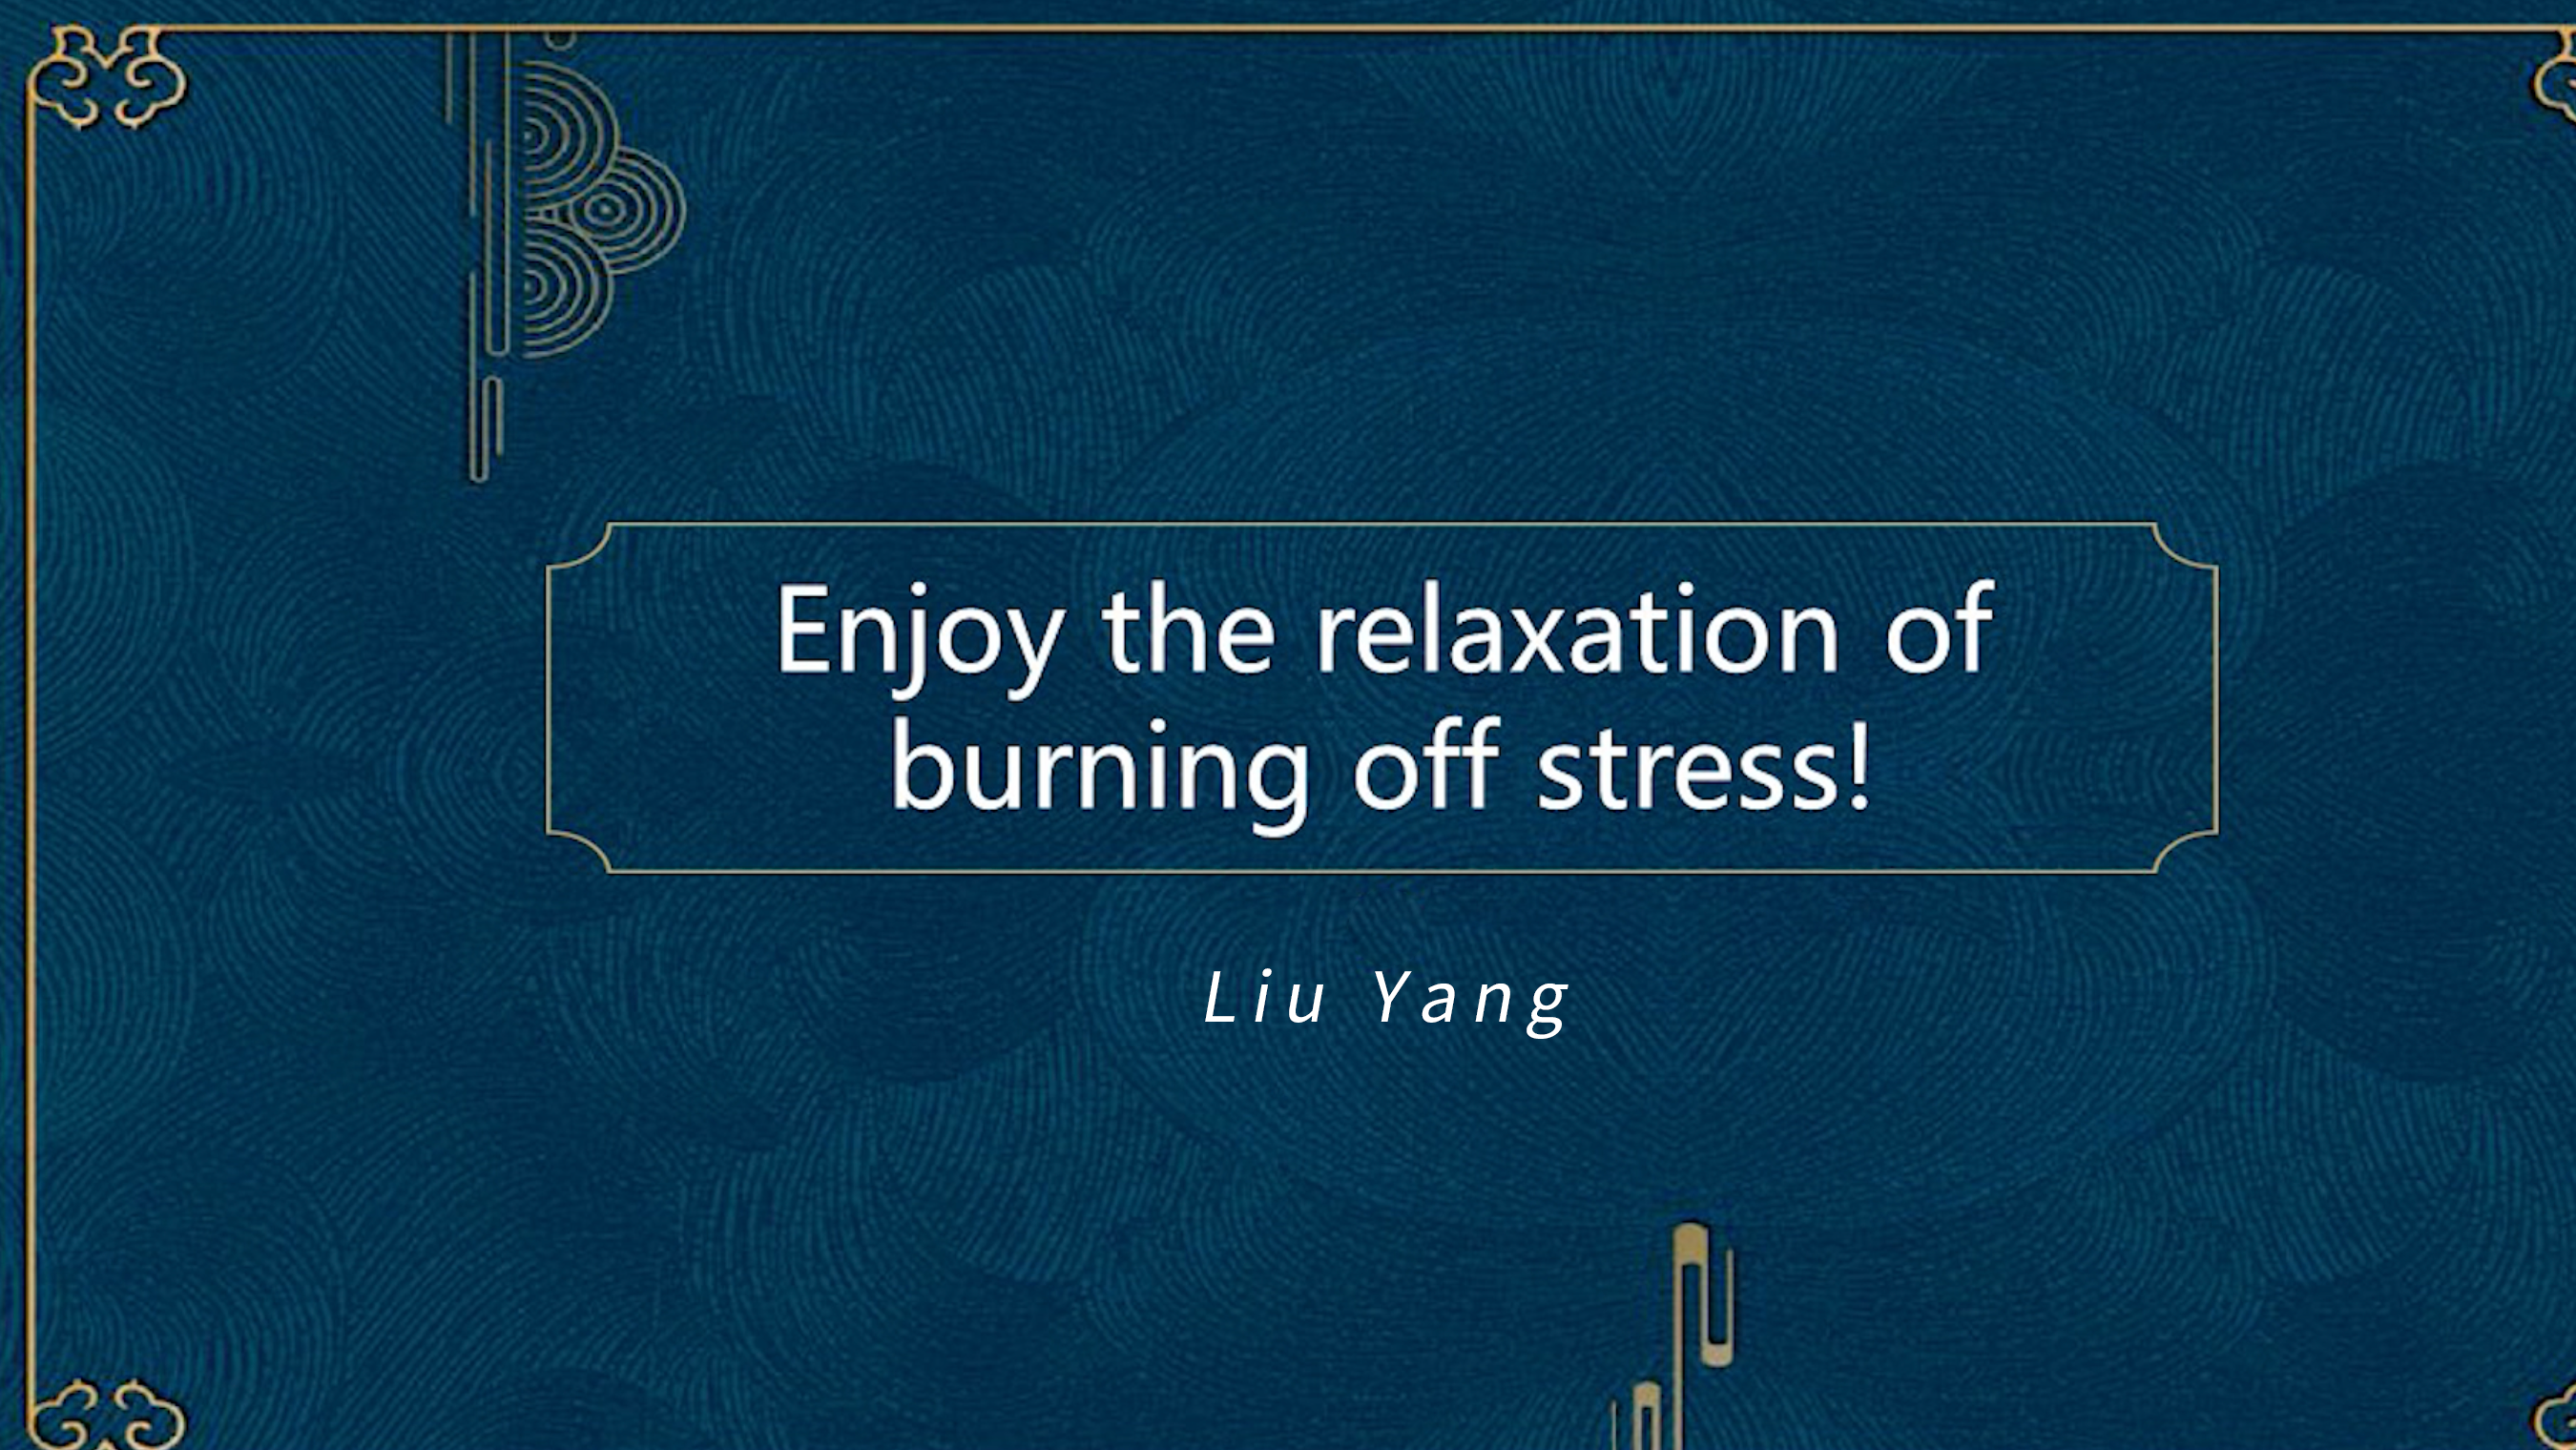 Enjoy the relaxation of burning off stress-Liu Yang